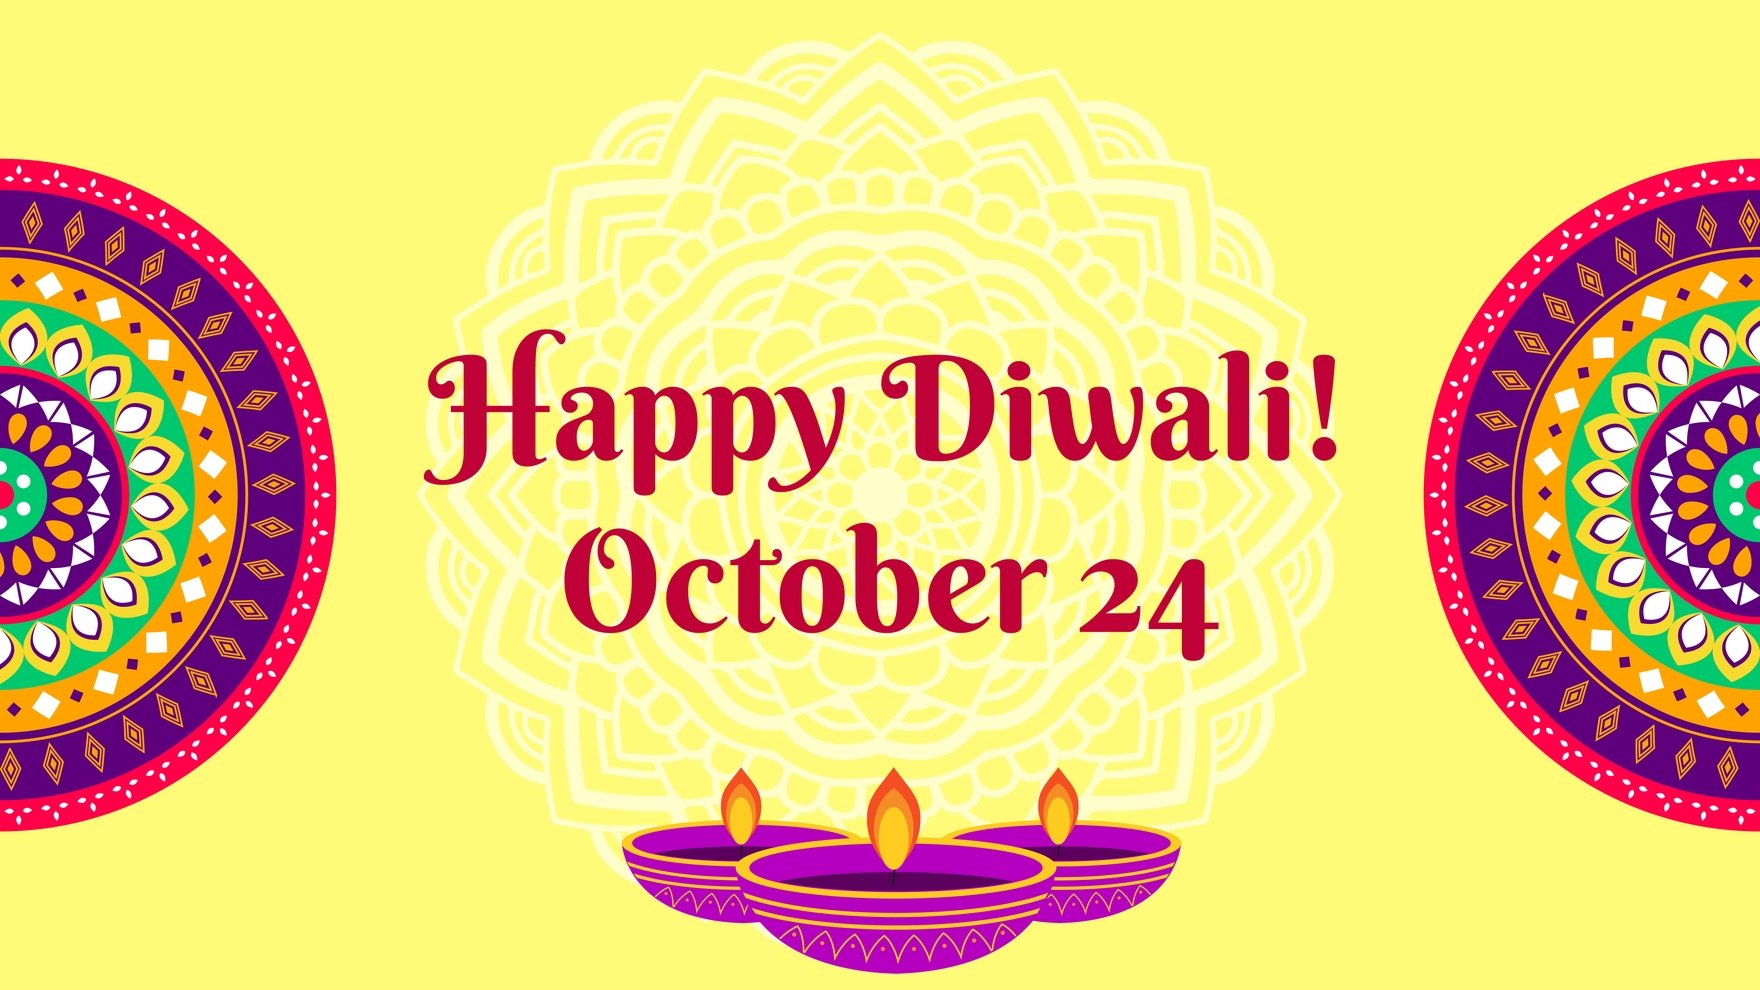 Happy Diwali Banner in Illustrator, PSD, EPS, SVG, JPG, PNG